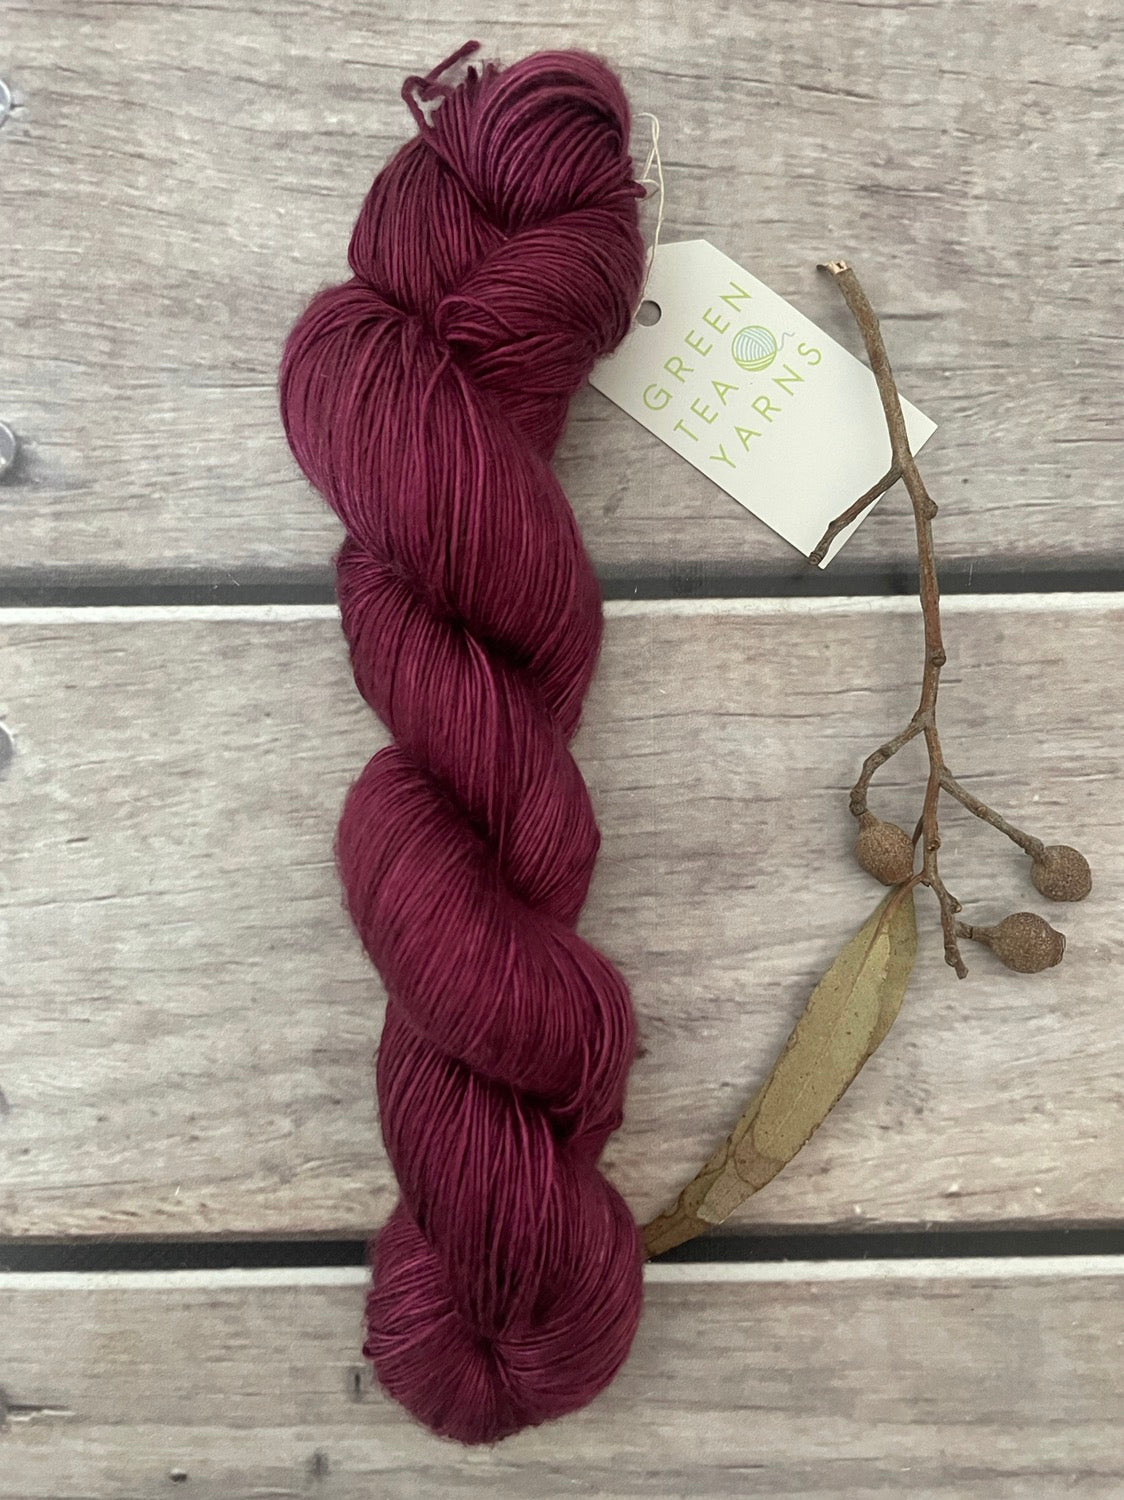 Claret ooak - 4 ply mulberry silk single -Rougui OB